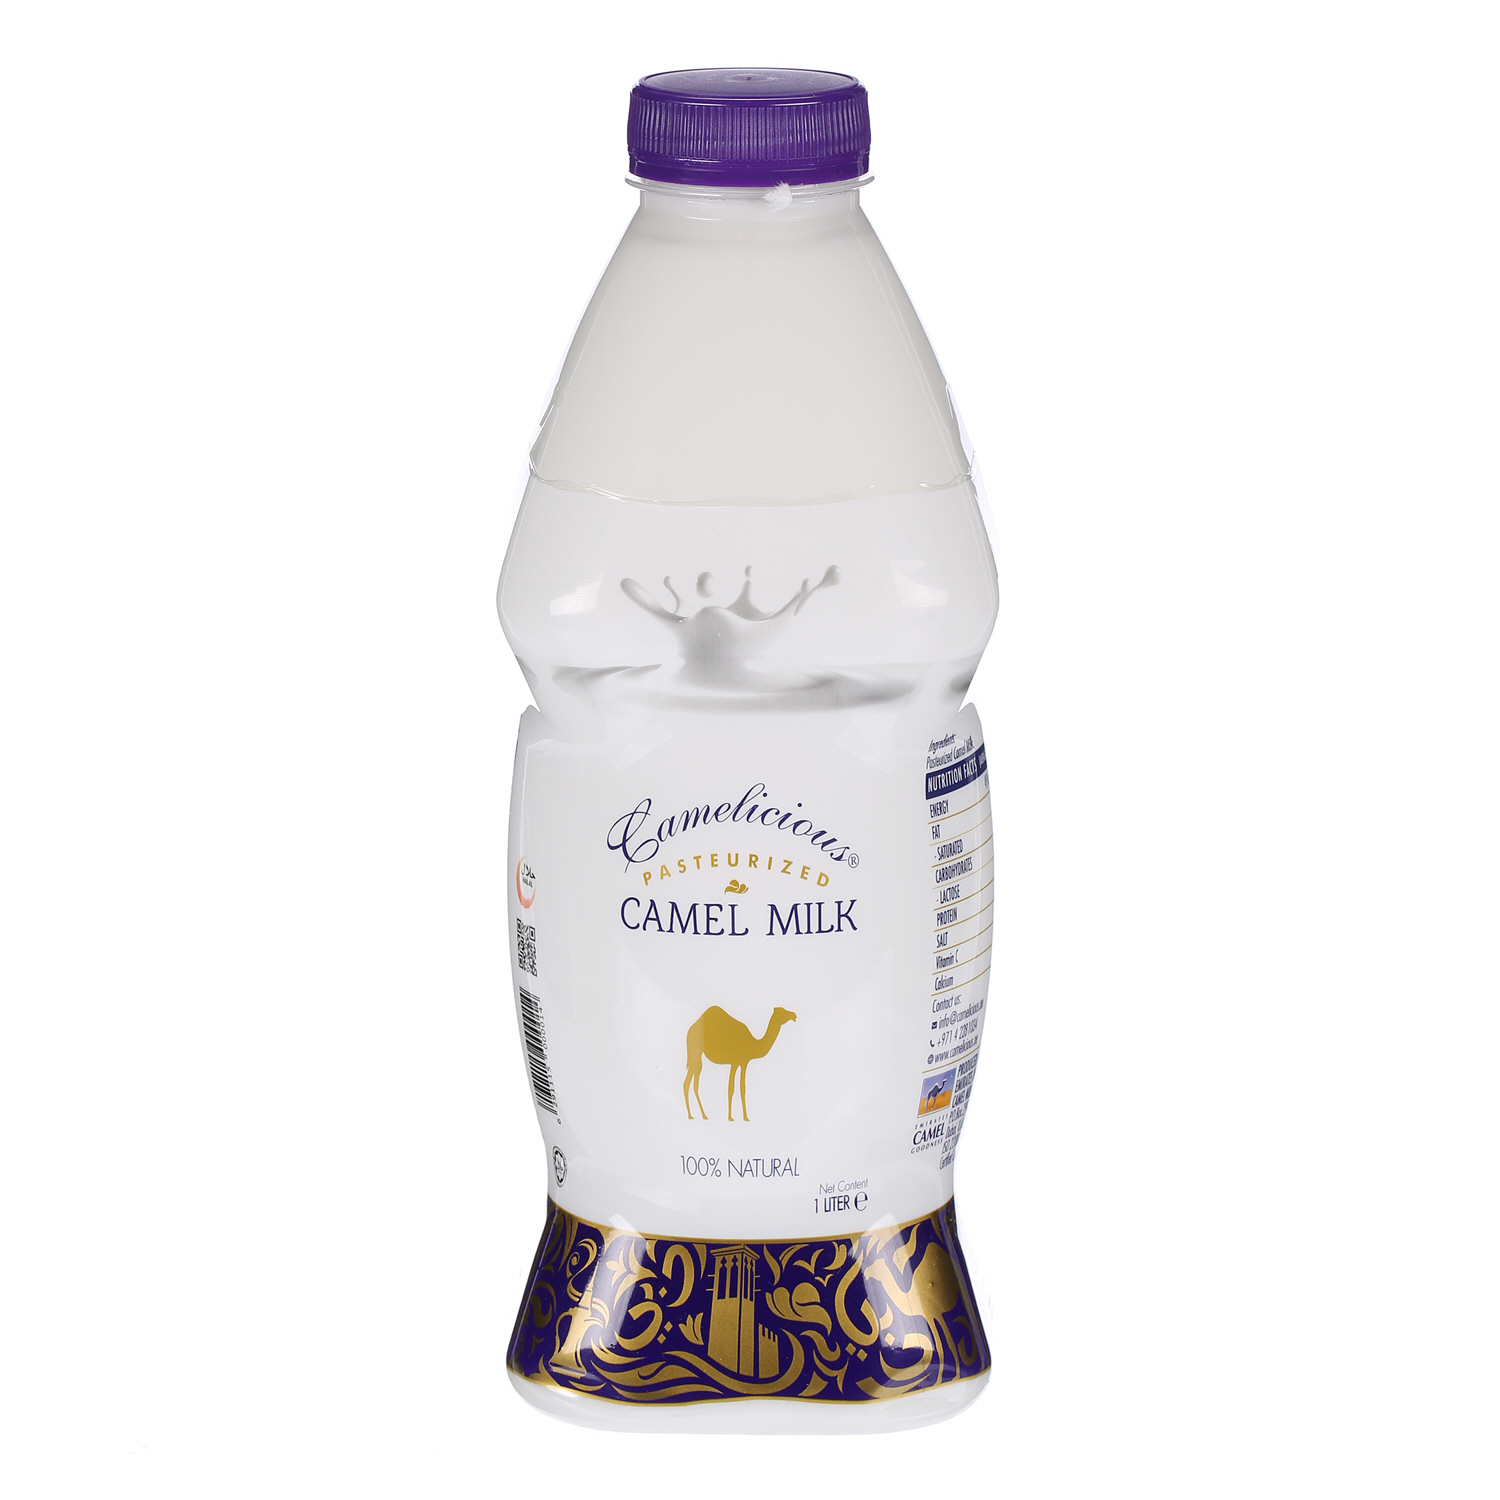 Camelicious Camel Milk 1Ltr